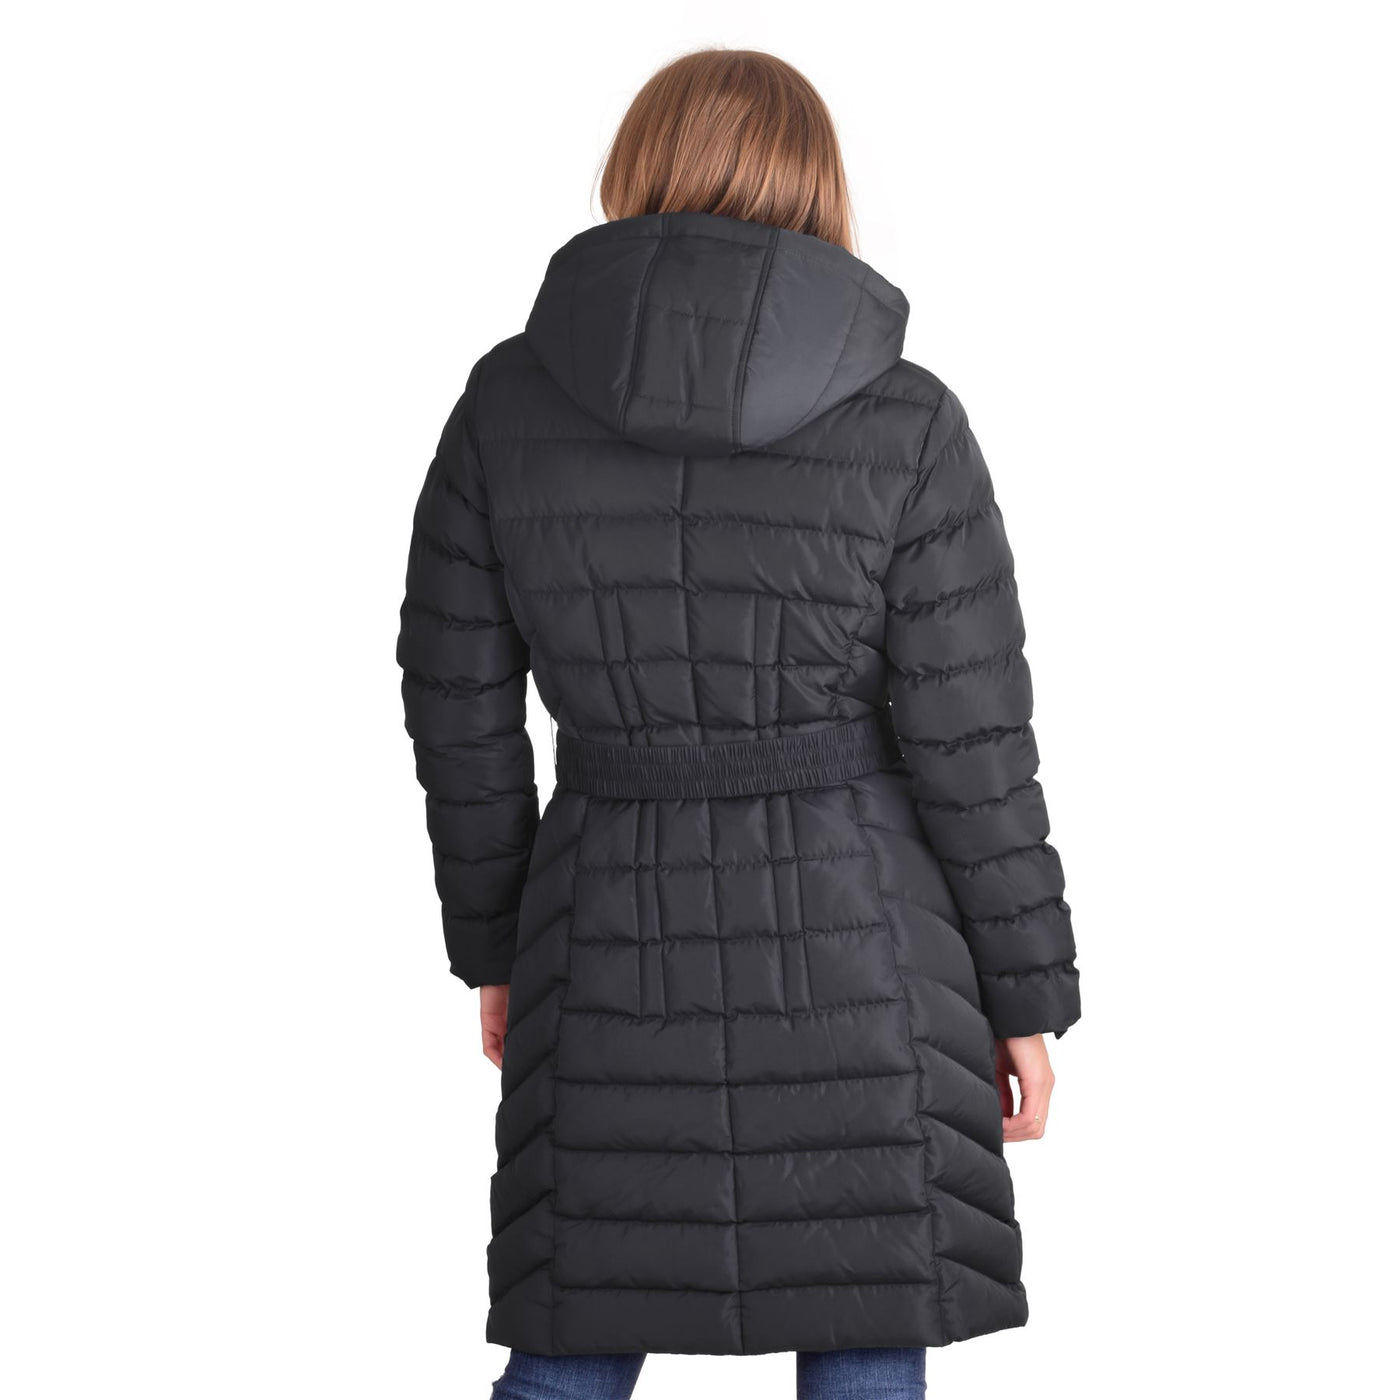 Womens Long Fur Trimmed Hooded Padded Puffer Parka Ladies Winter Jacket Coat